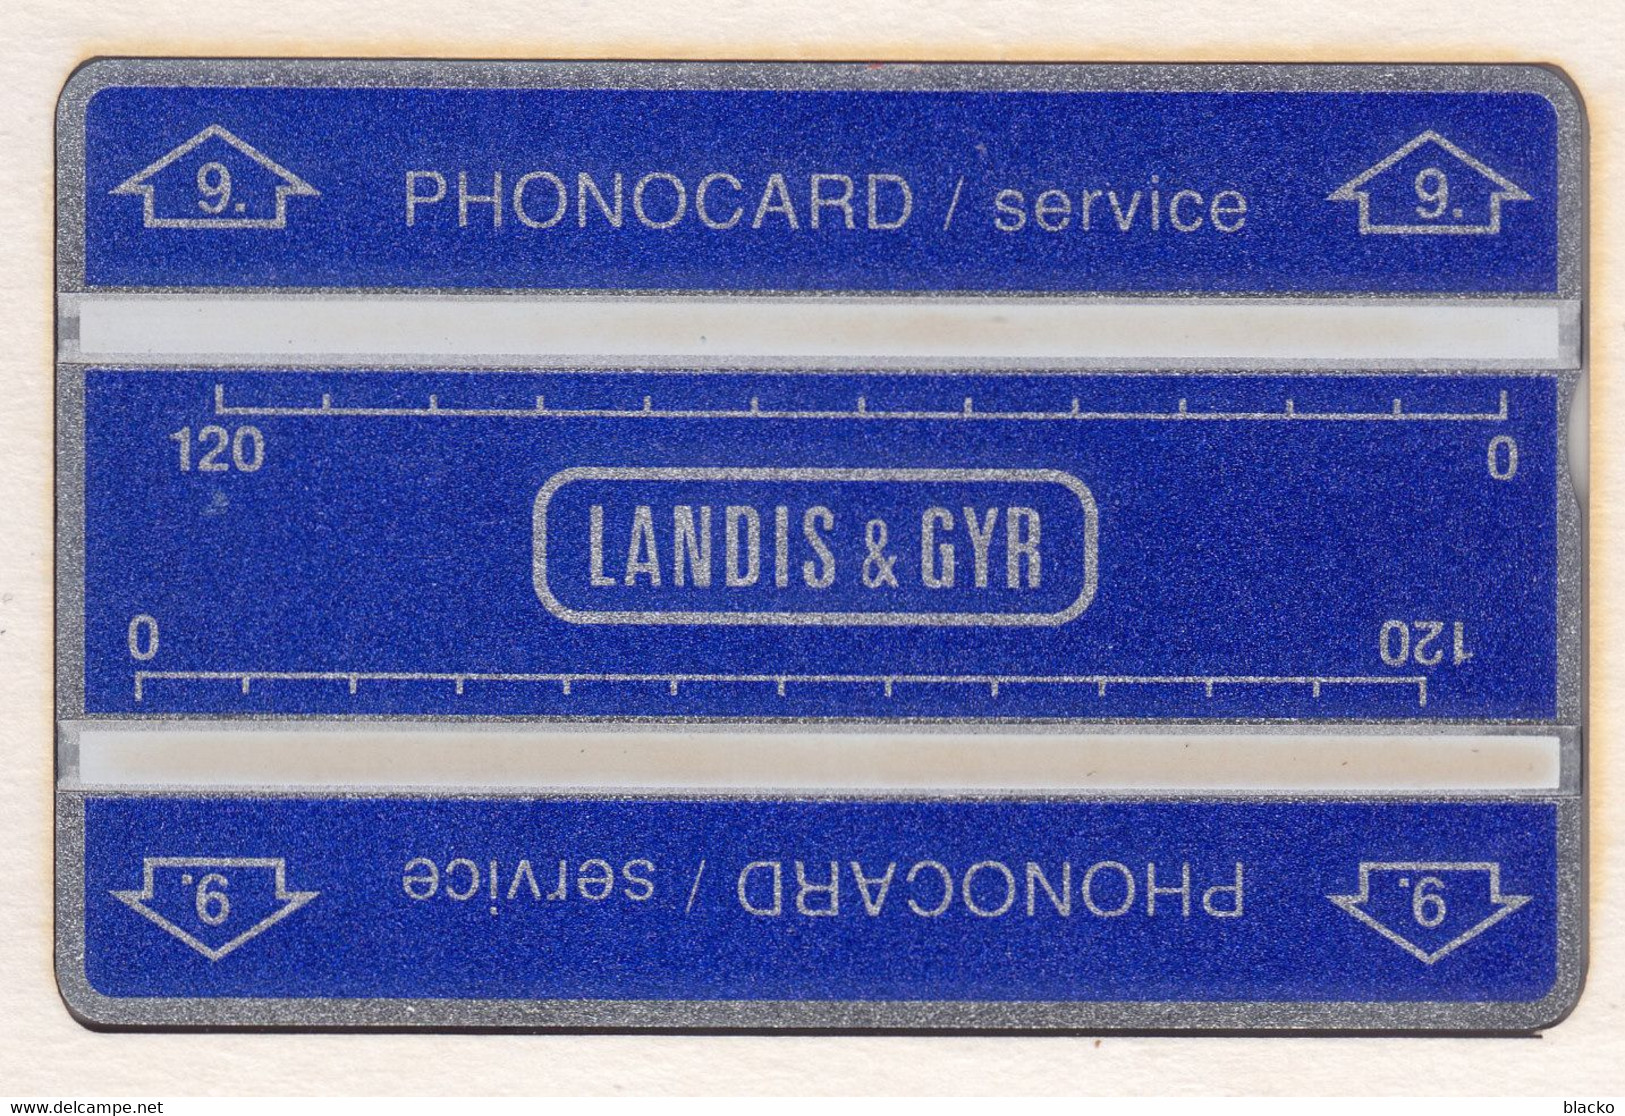 Netherlands - 1993 Service Card 3mm Notch 9 In Arrow 341K - Dbz04 - [4] Test & Services